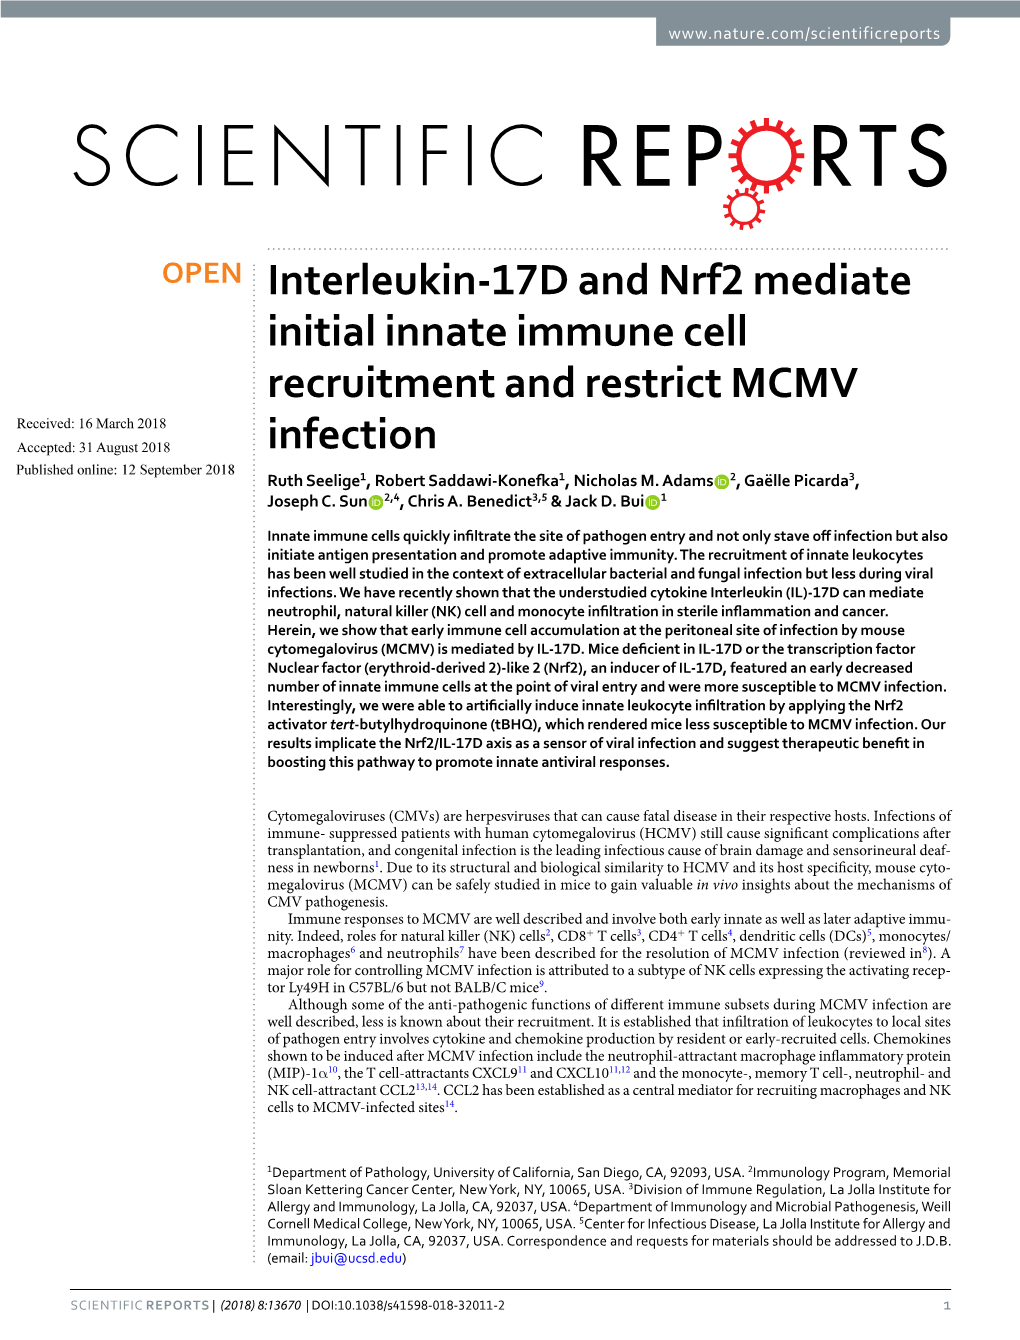 Interleukin-17D and Nrf2 Mediate Initial Innate Immune Cell